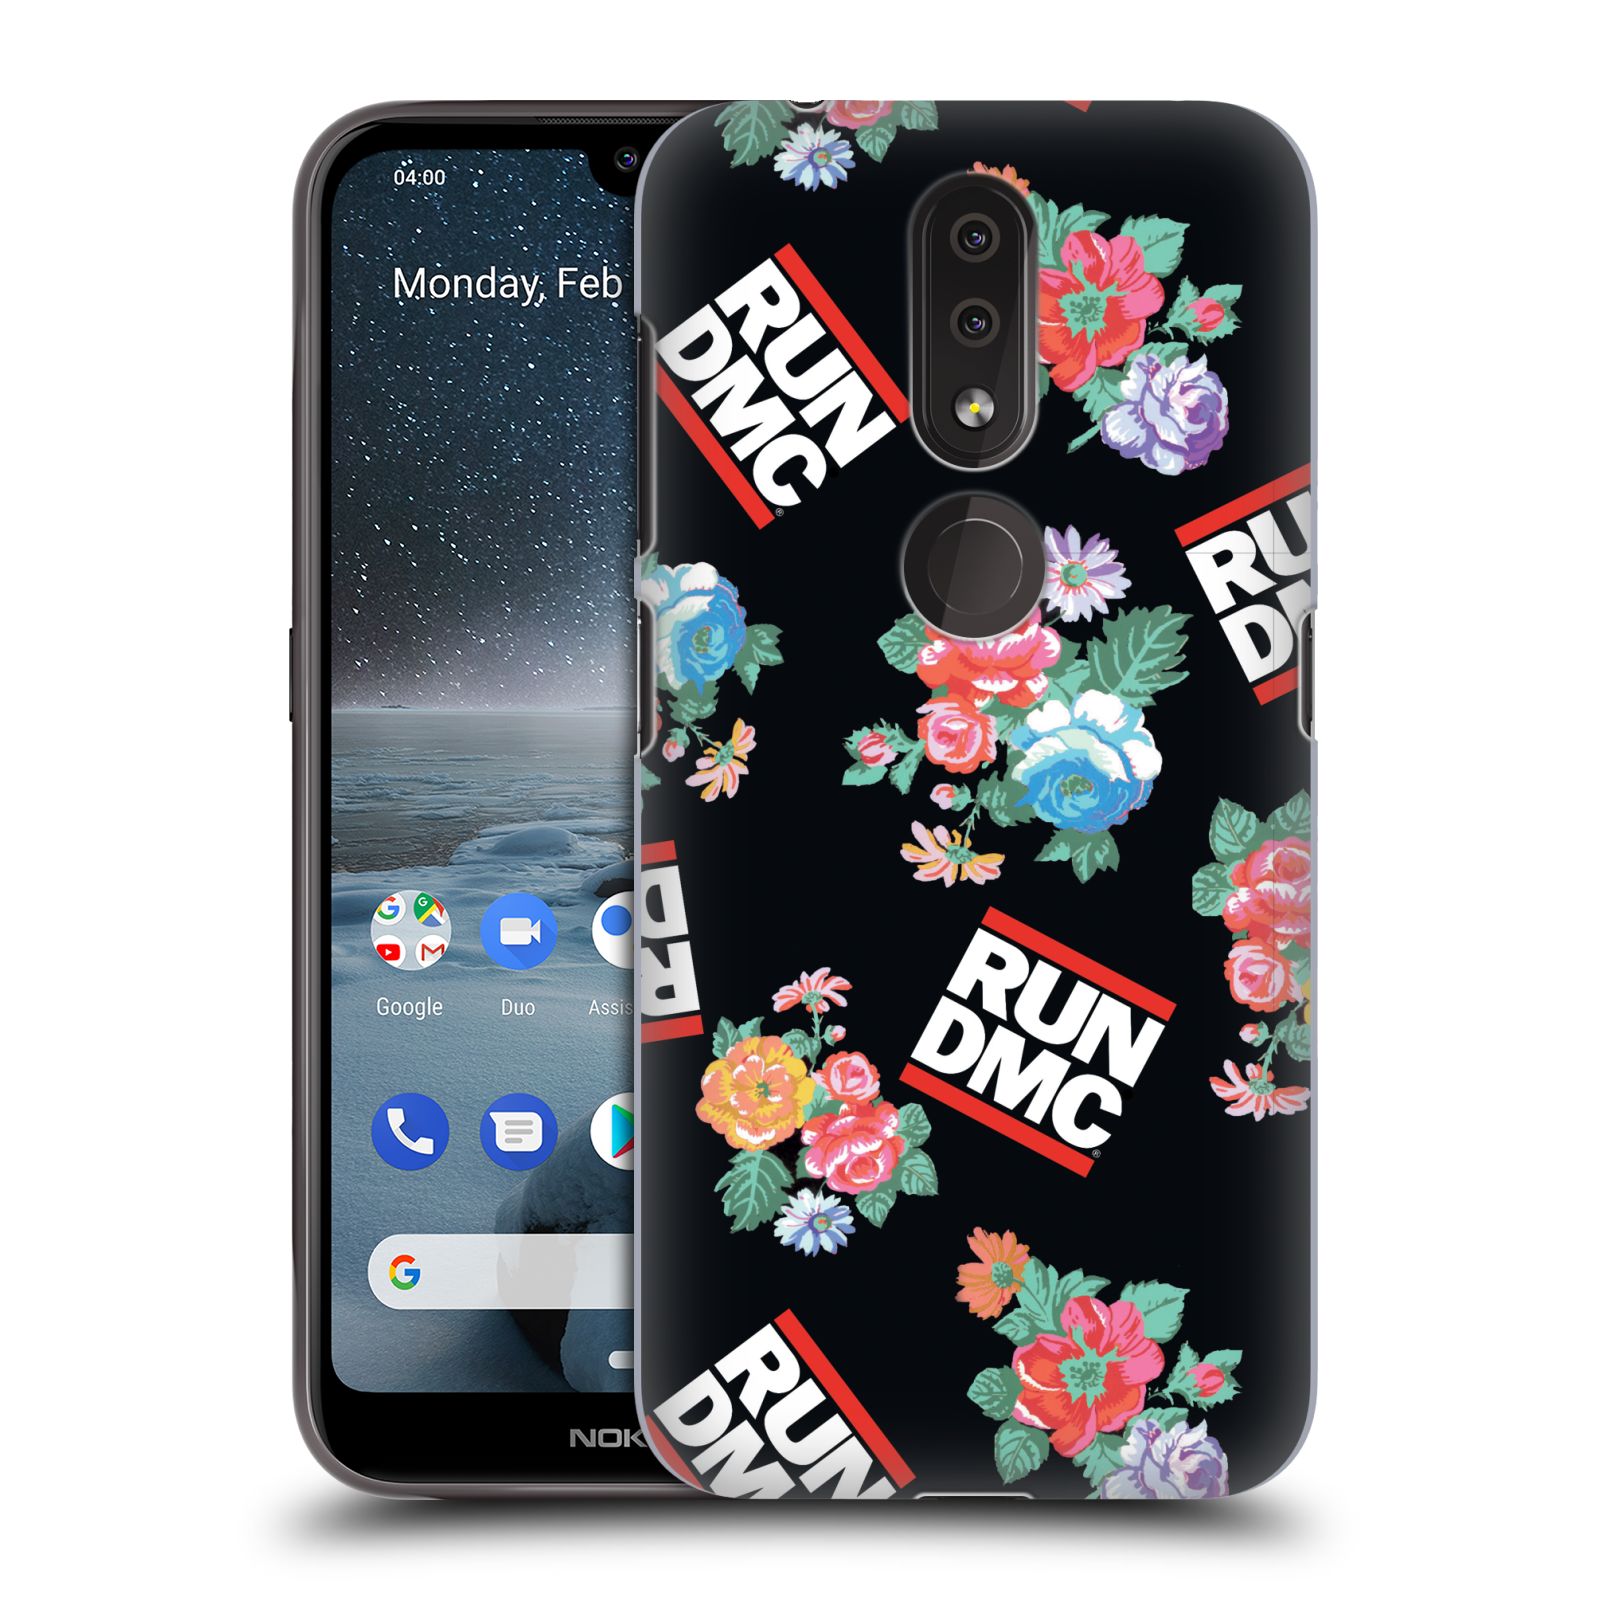 Pouzdro na mobil Nokia 4.2 - HEAD CASE - rapová kapela Run DMC květiny černé pozadí